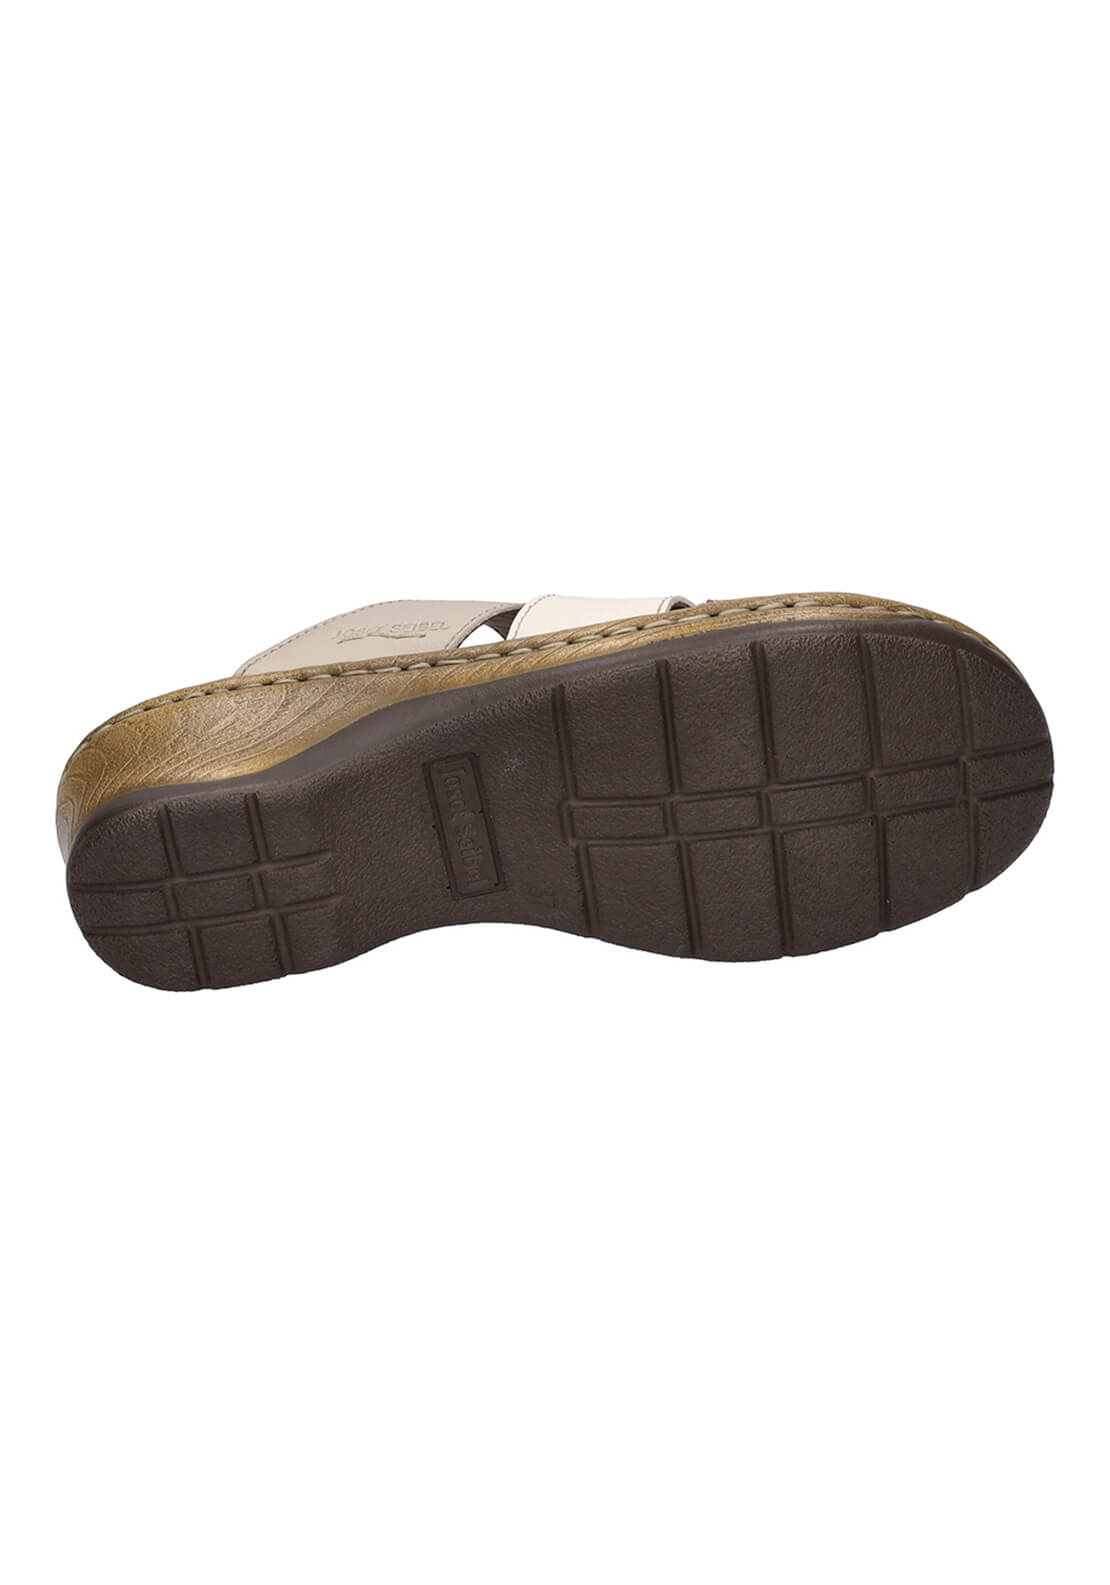 Josef Seibel Catalonia 86 Wedge Sandals - Cognac 3 Shaws Department Stores